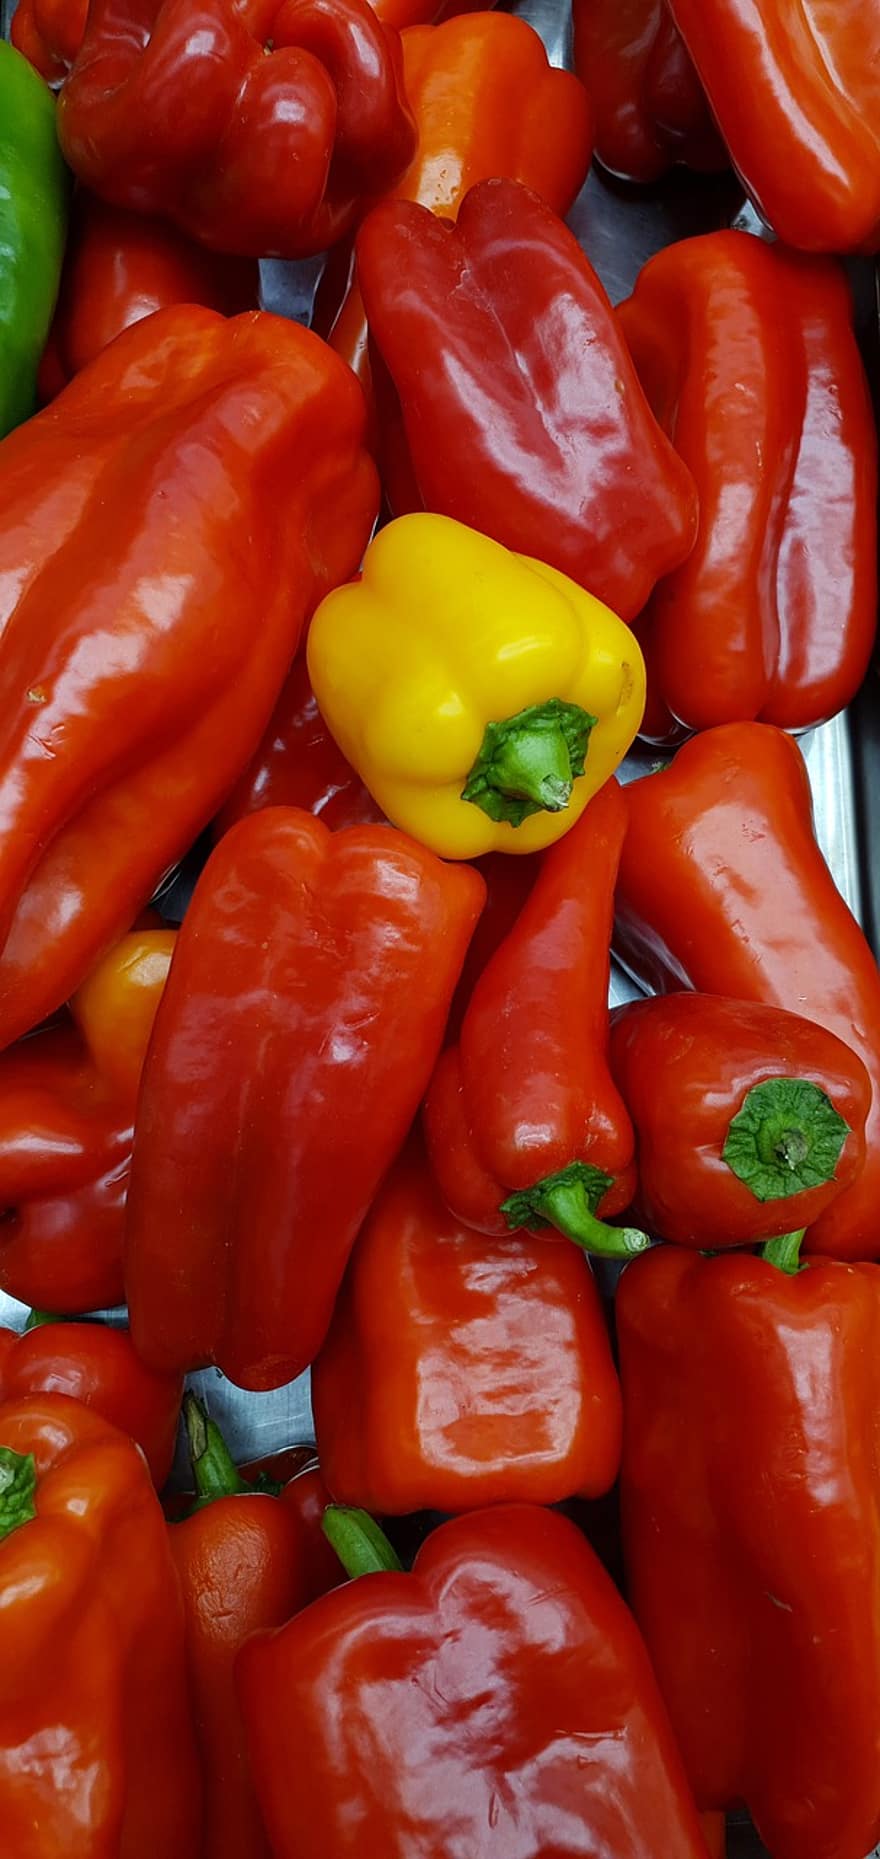 Peppers, Organice, Spicy, Flavor, Vegetables, Food, Healthy, vegetable, freshness, bell pepper, healthy eating